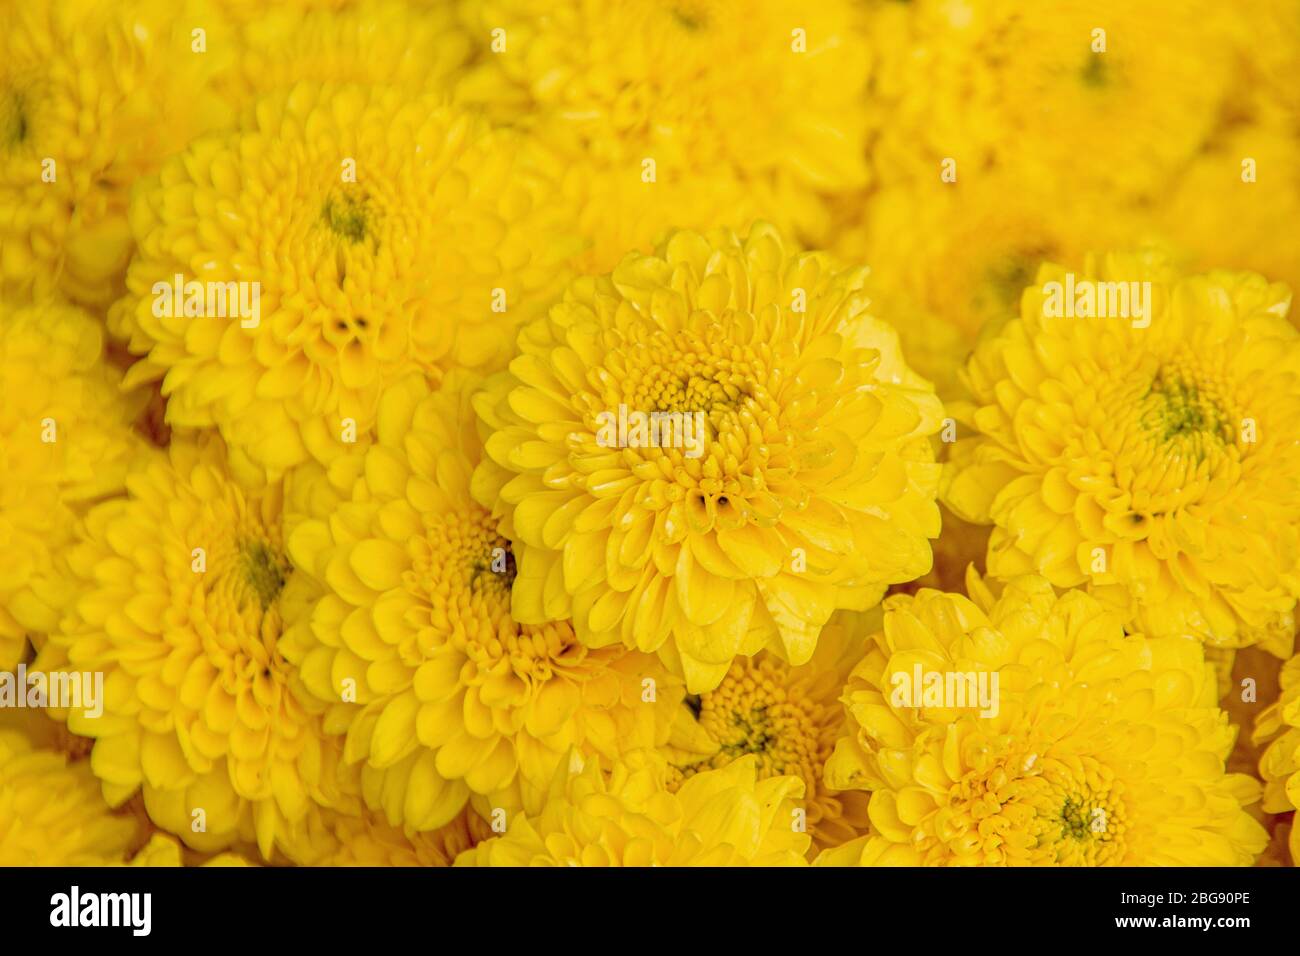 yellow daisy flower texture background Stock Photo